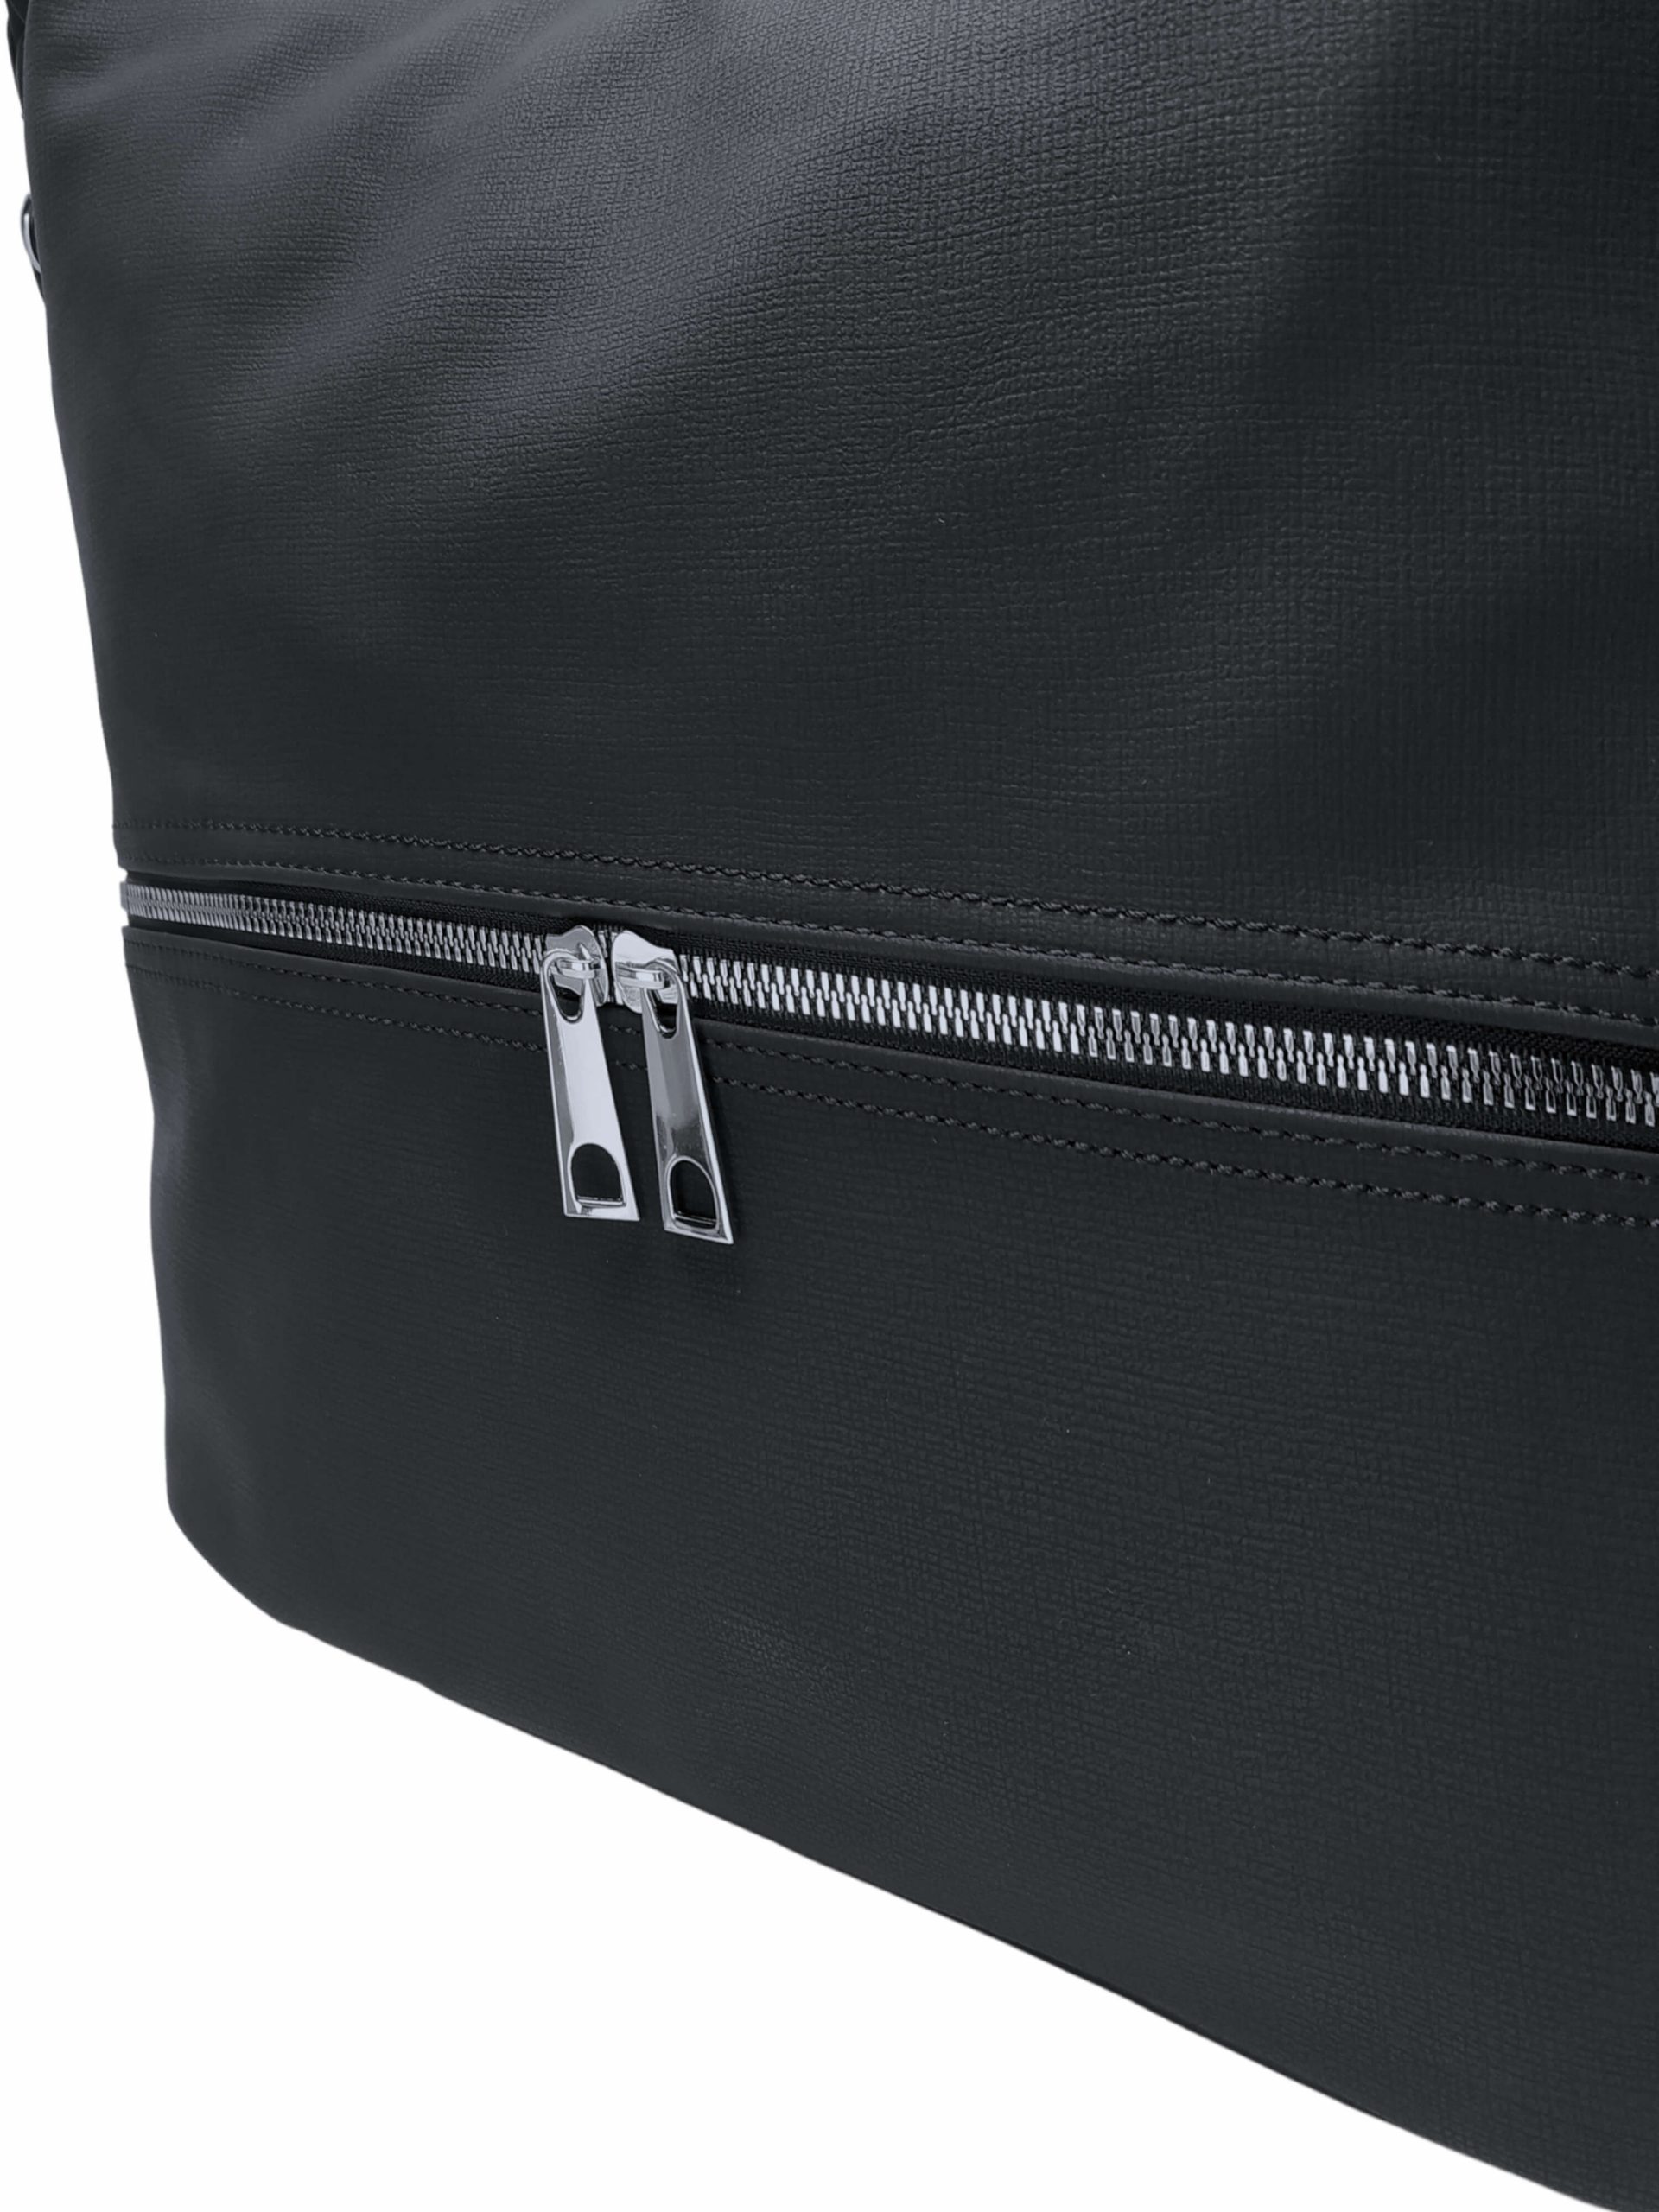 Velký černý kabelko-batoh 2v1 s praktickou kapsou, Tapple, H190010N, detail kabelko-batohu 2v1